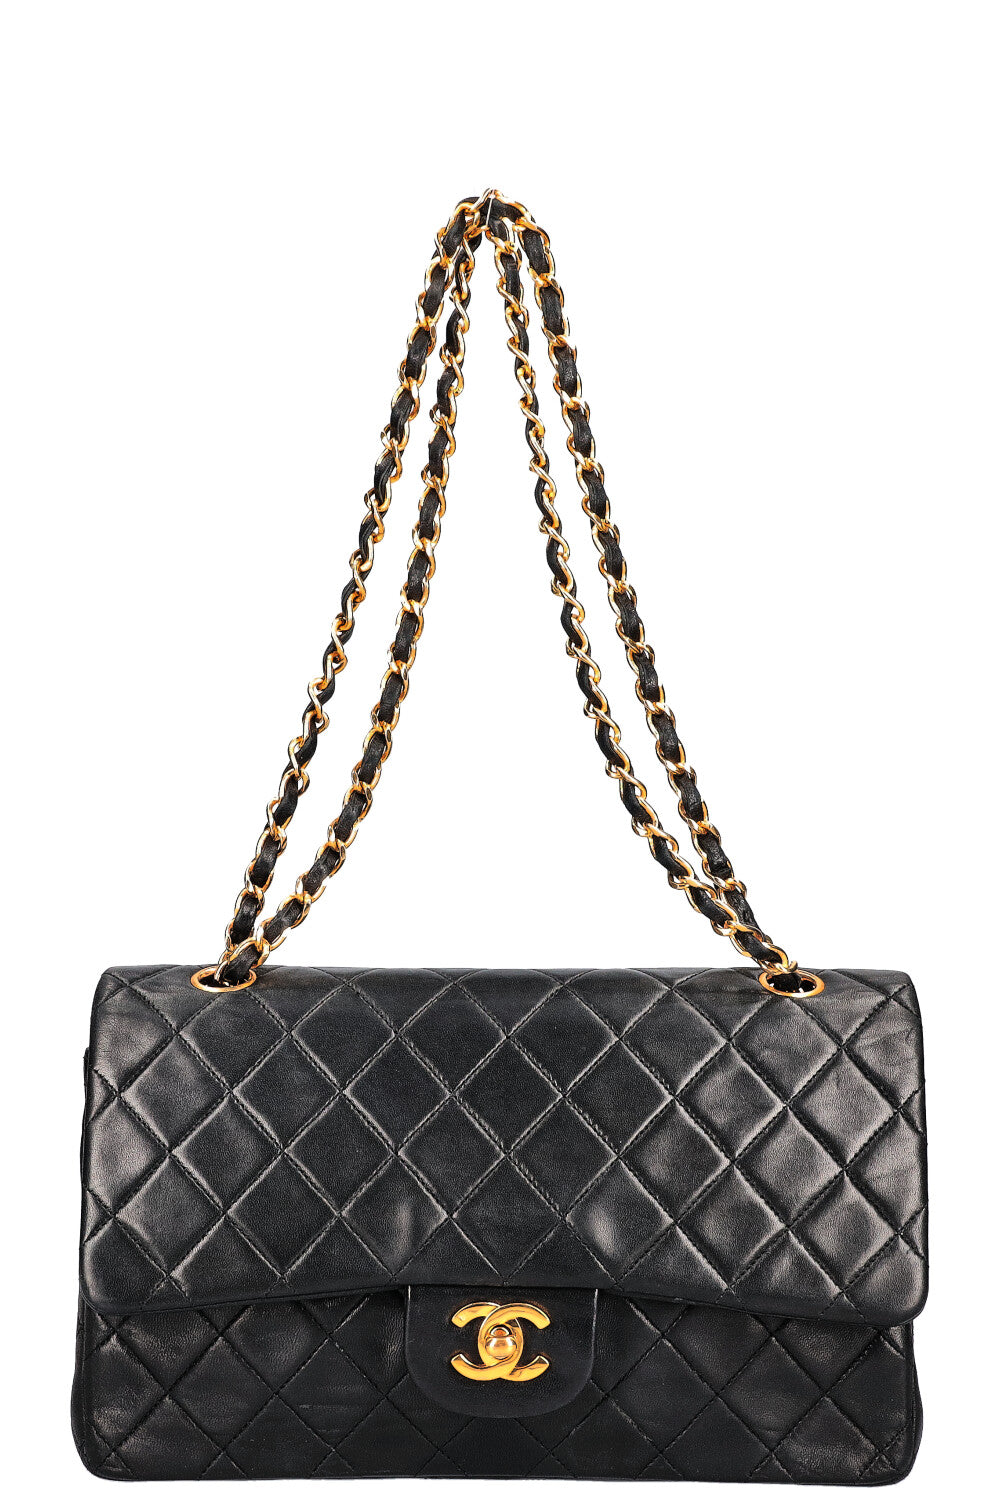 Chanel Medium Double Flap Bag Black